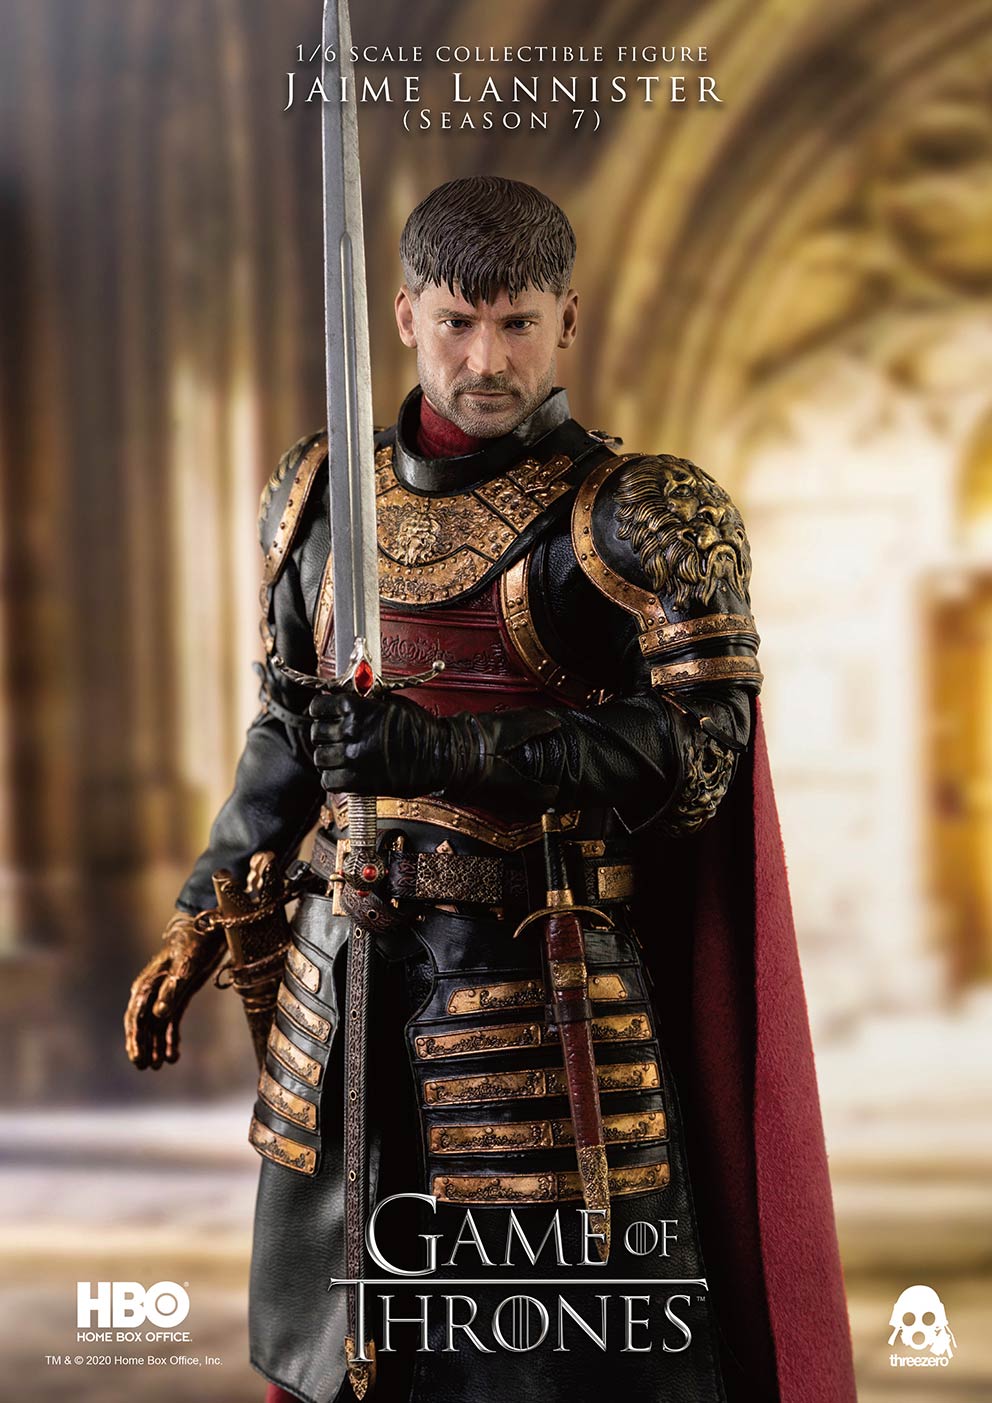 Male - NEW PRODUCT: ThreeZero - "Game of Thrones" Season 7 - Kingslayer Jaime Lannister 0373